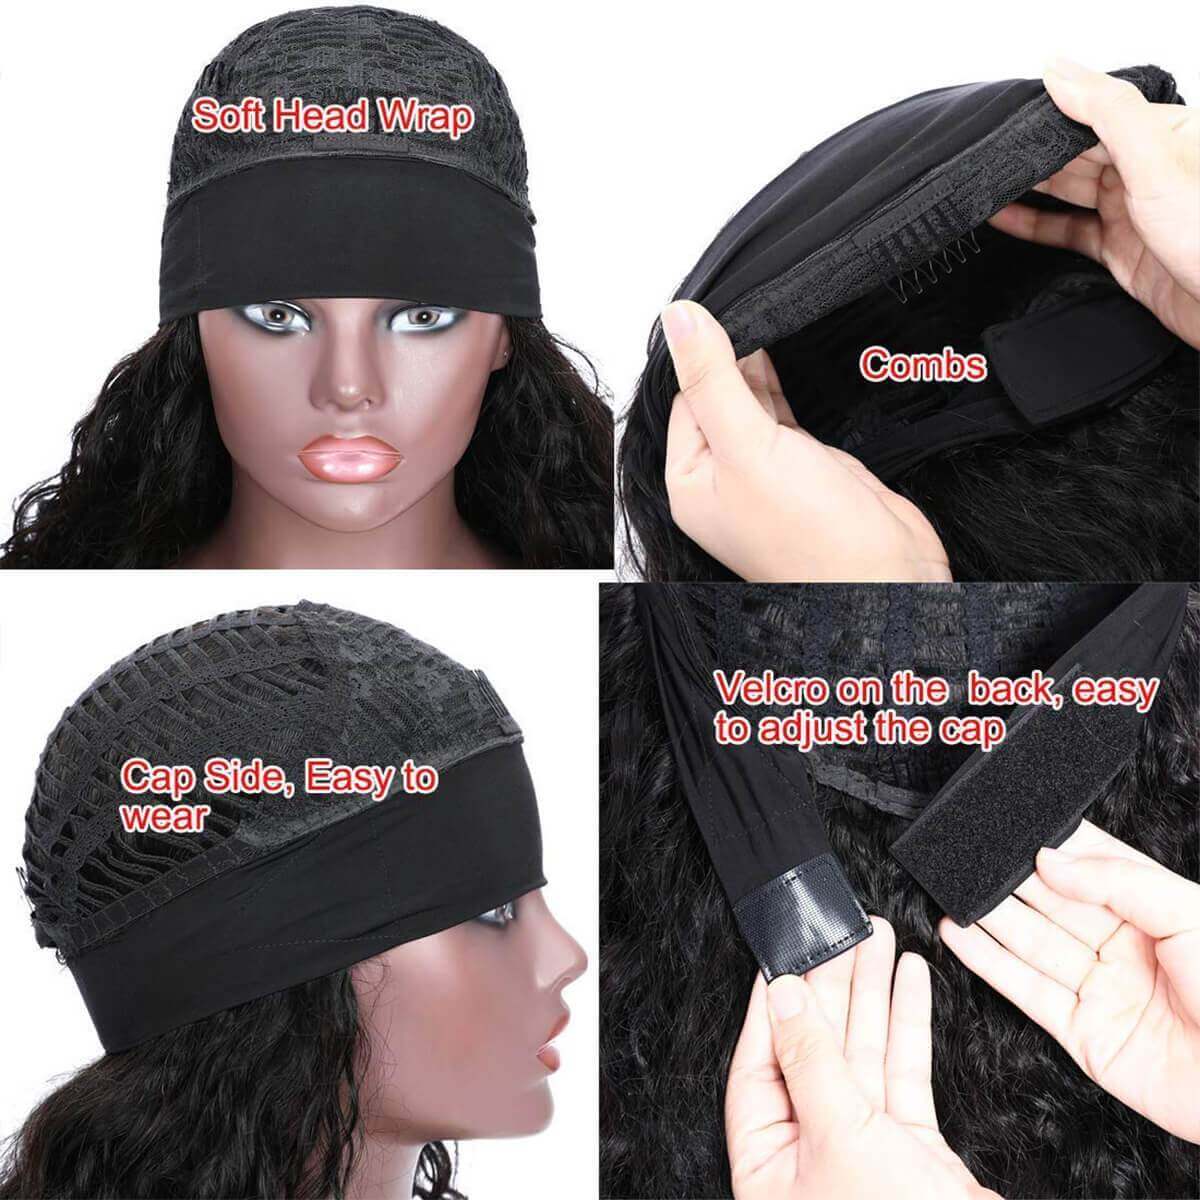 Body Wave Human Hair Wigs Glueless None Lace Front Wigs Brazilian Virgin Hair Machine Made Ice Silk Deep Curly Headband Half Wig